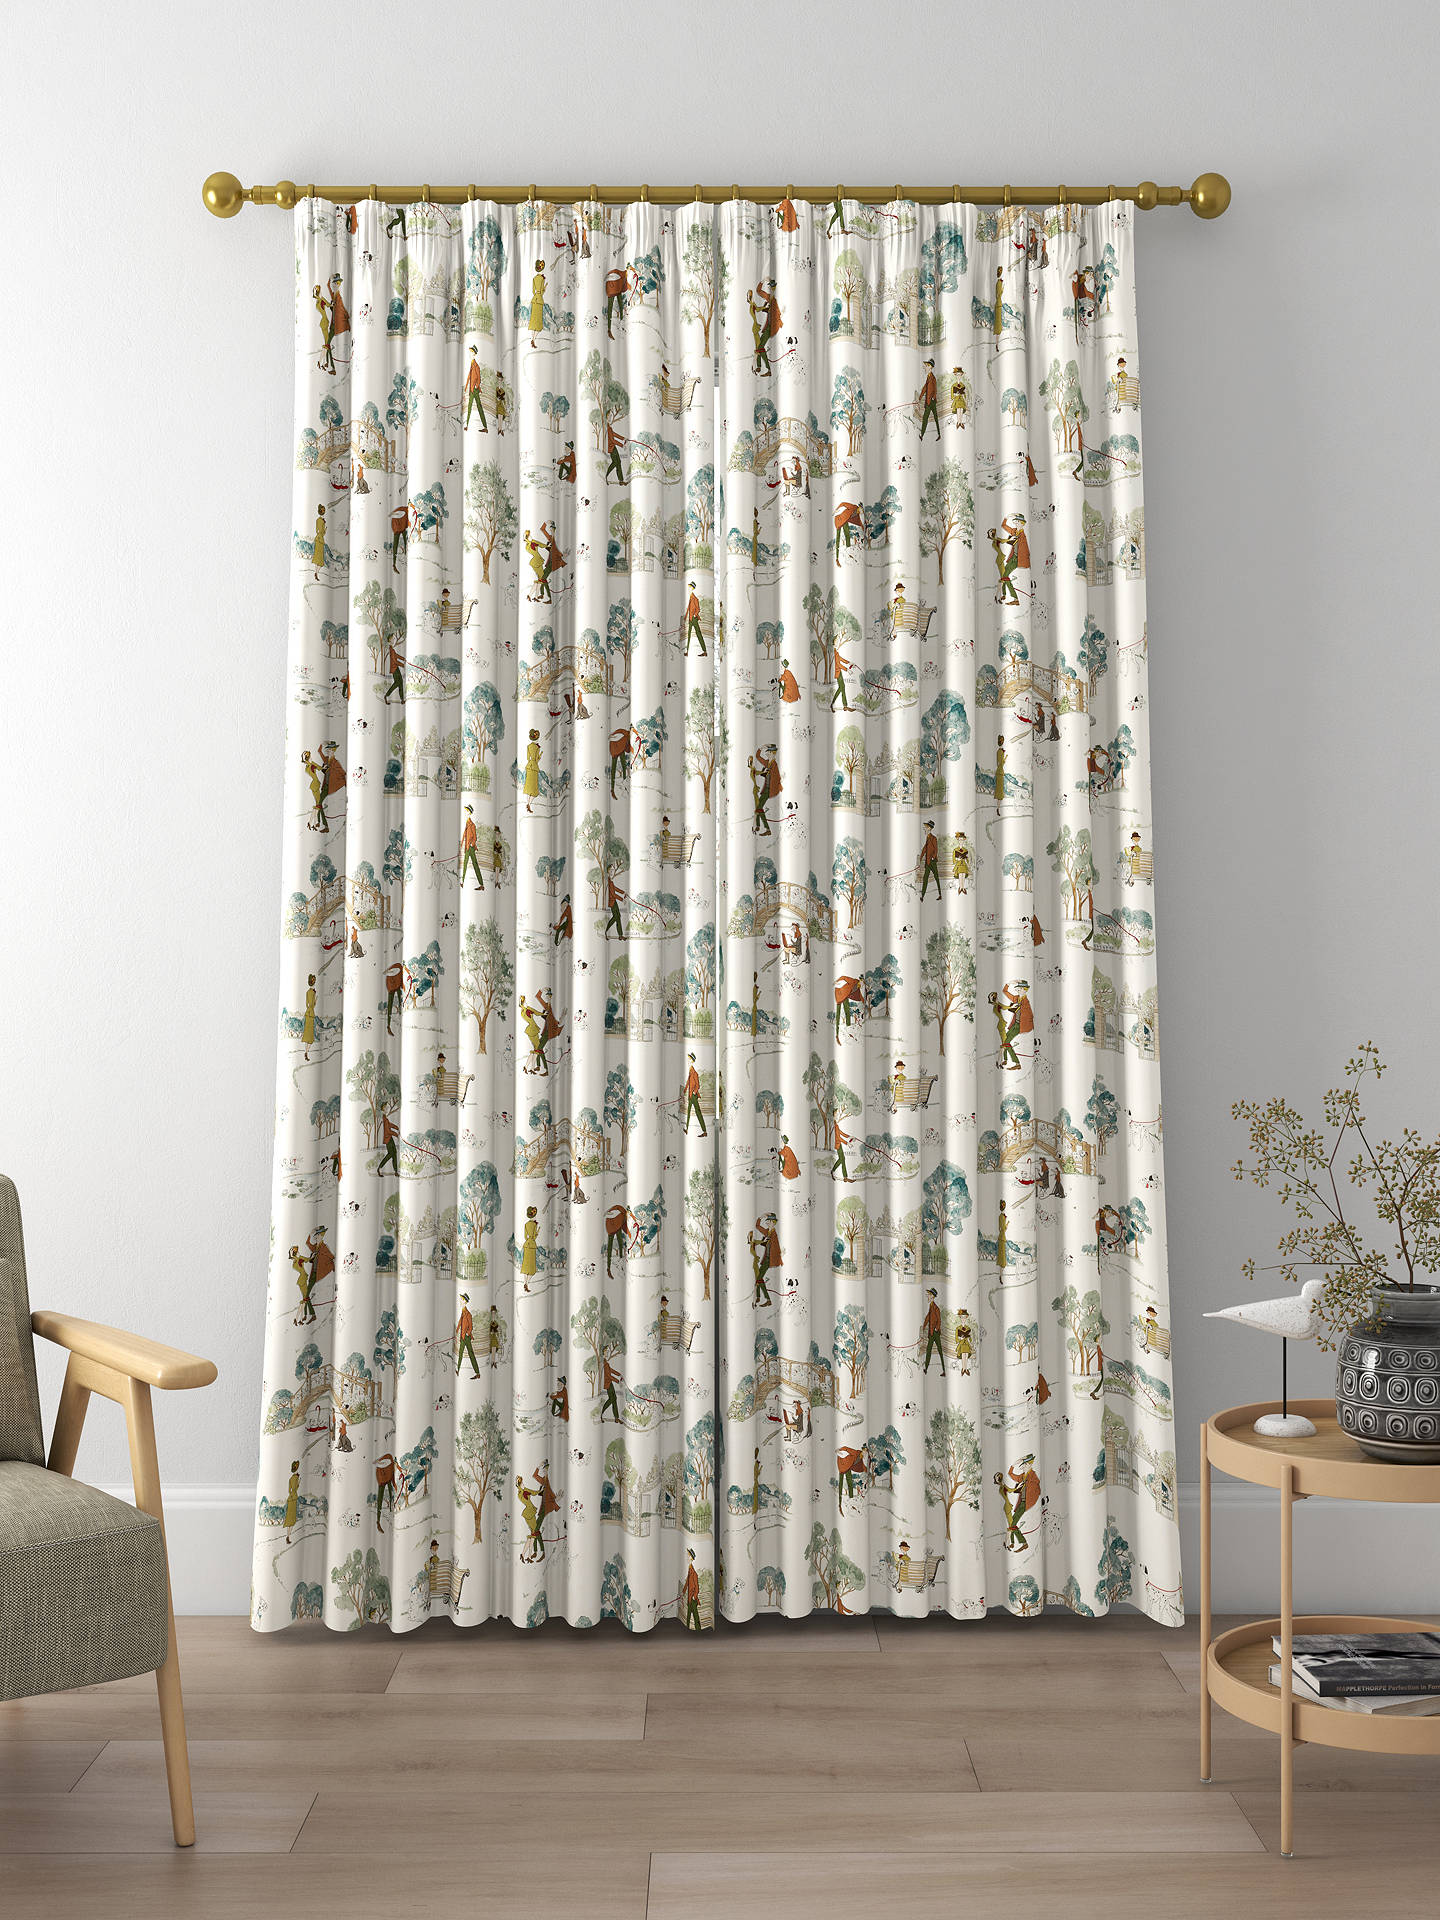 Sanderson 101 Dalmatians Made to Measure Curtains, Breeze Blue